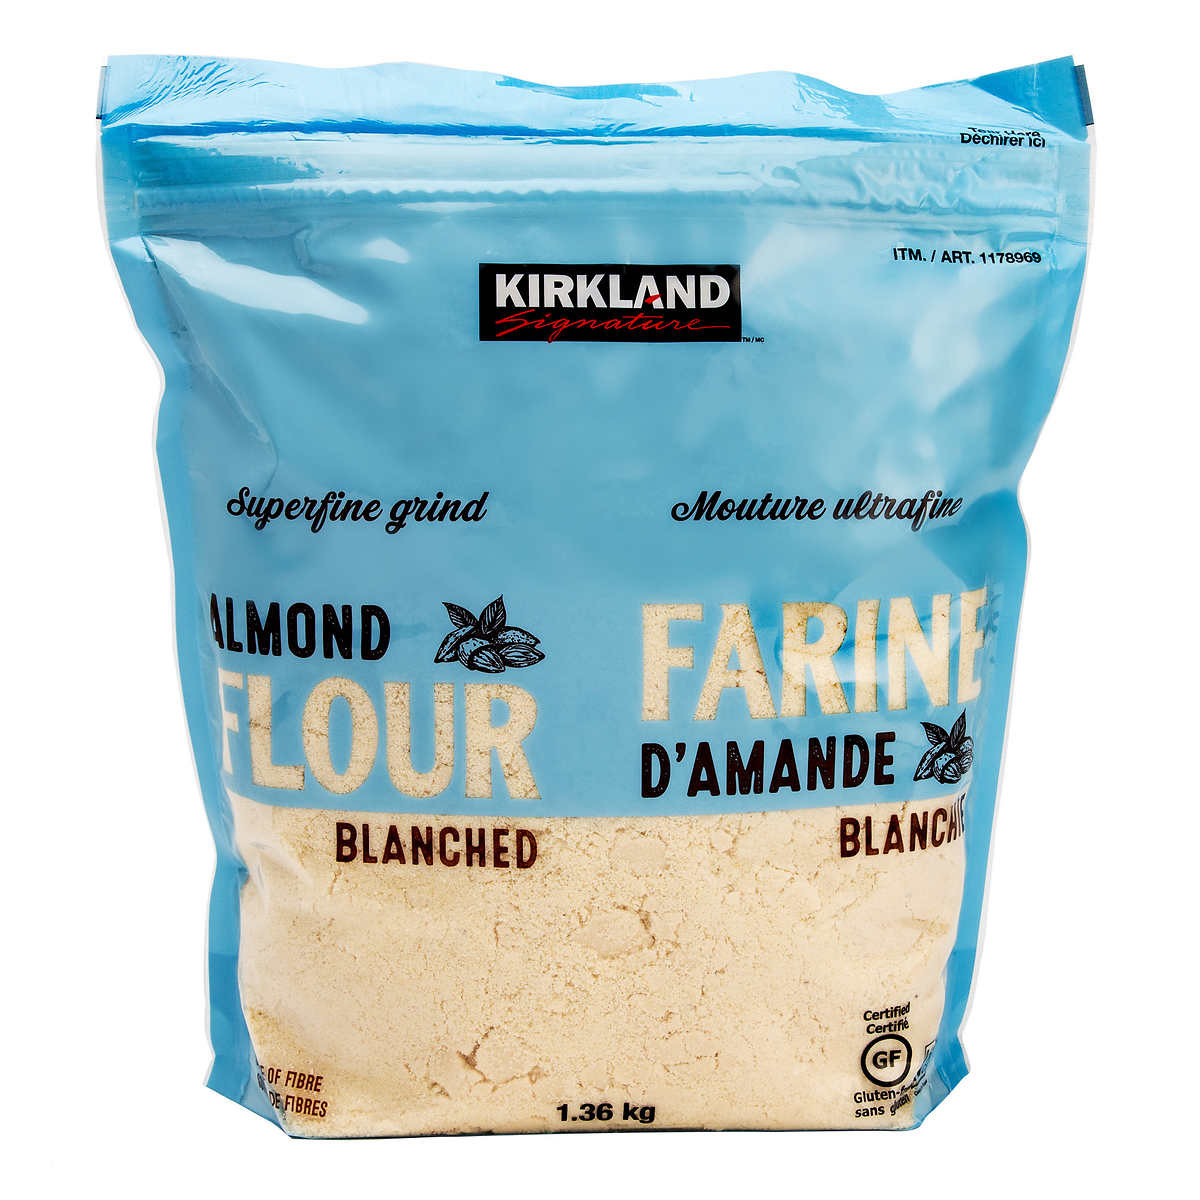 Kirkland signature superfine grind blanched almond flour 1.36 kg